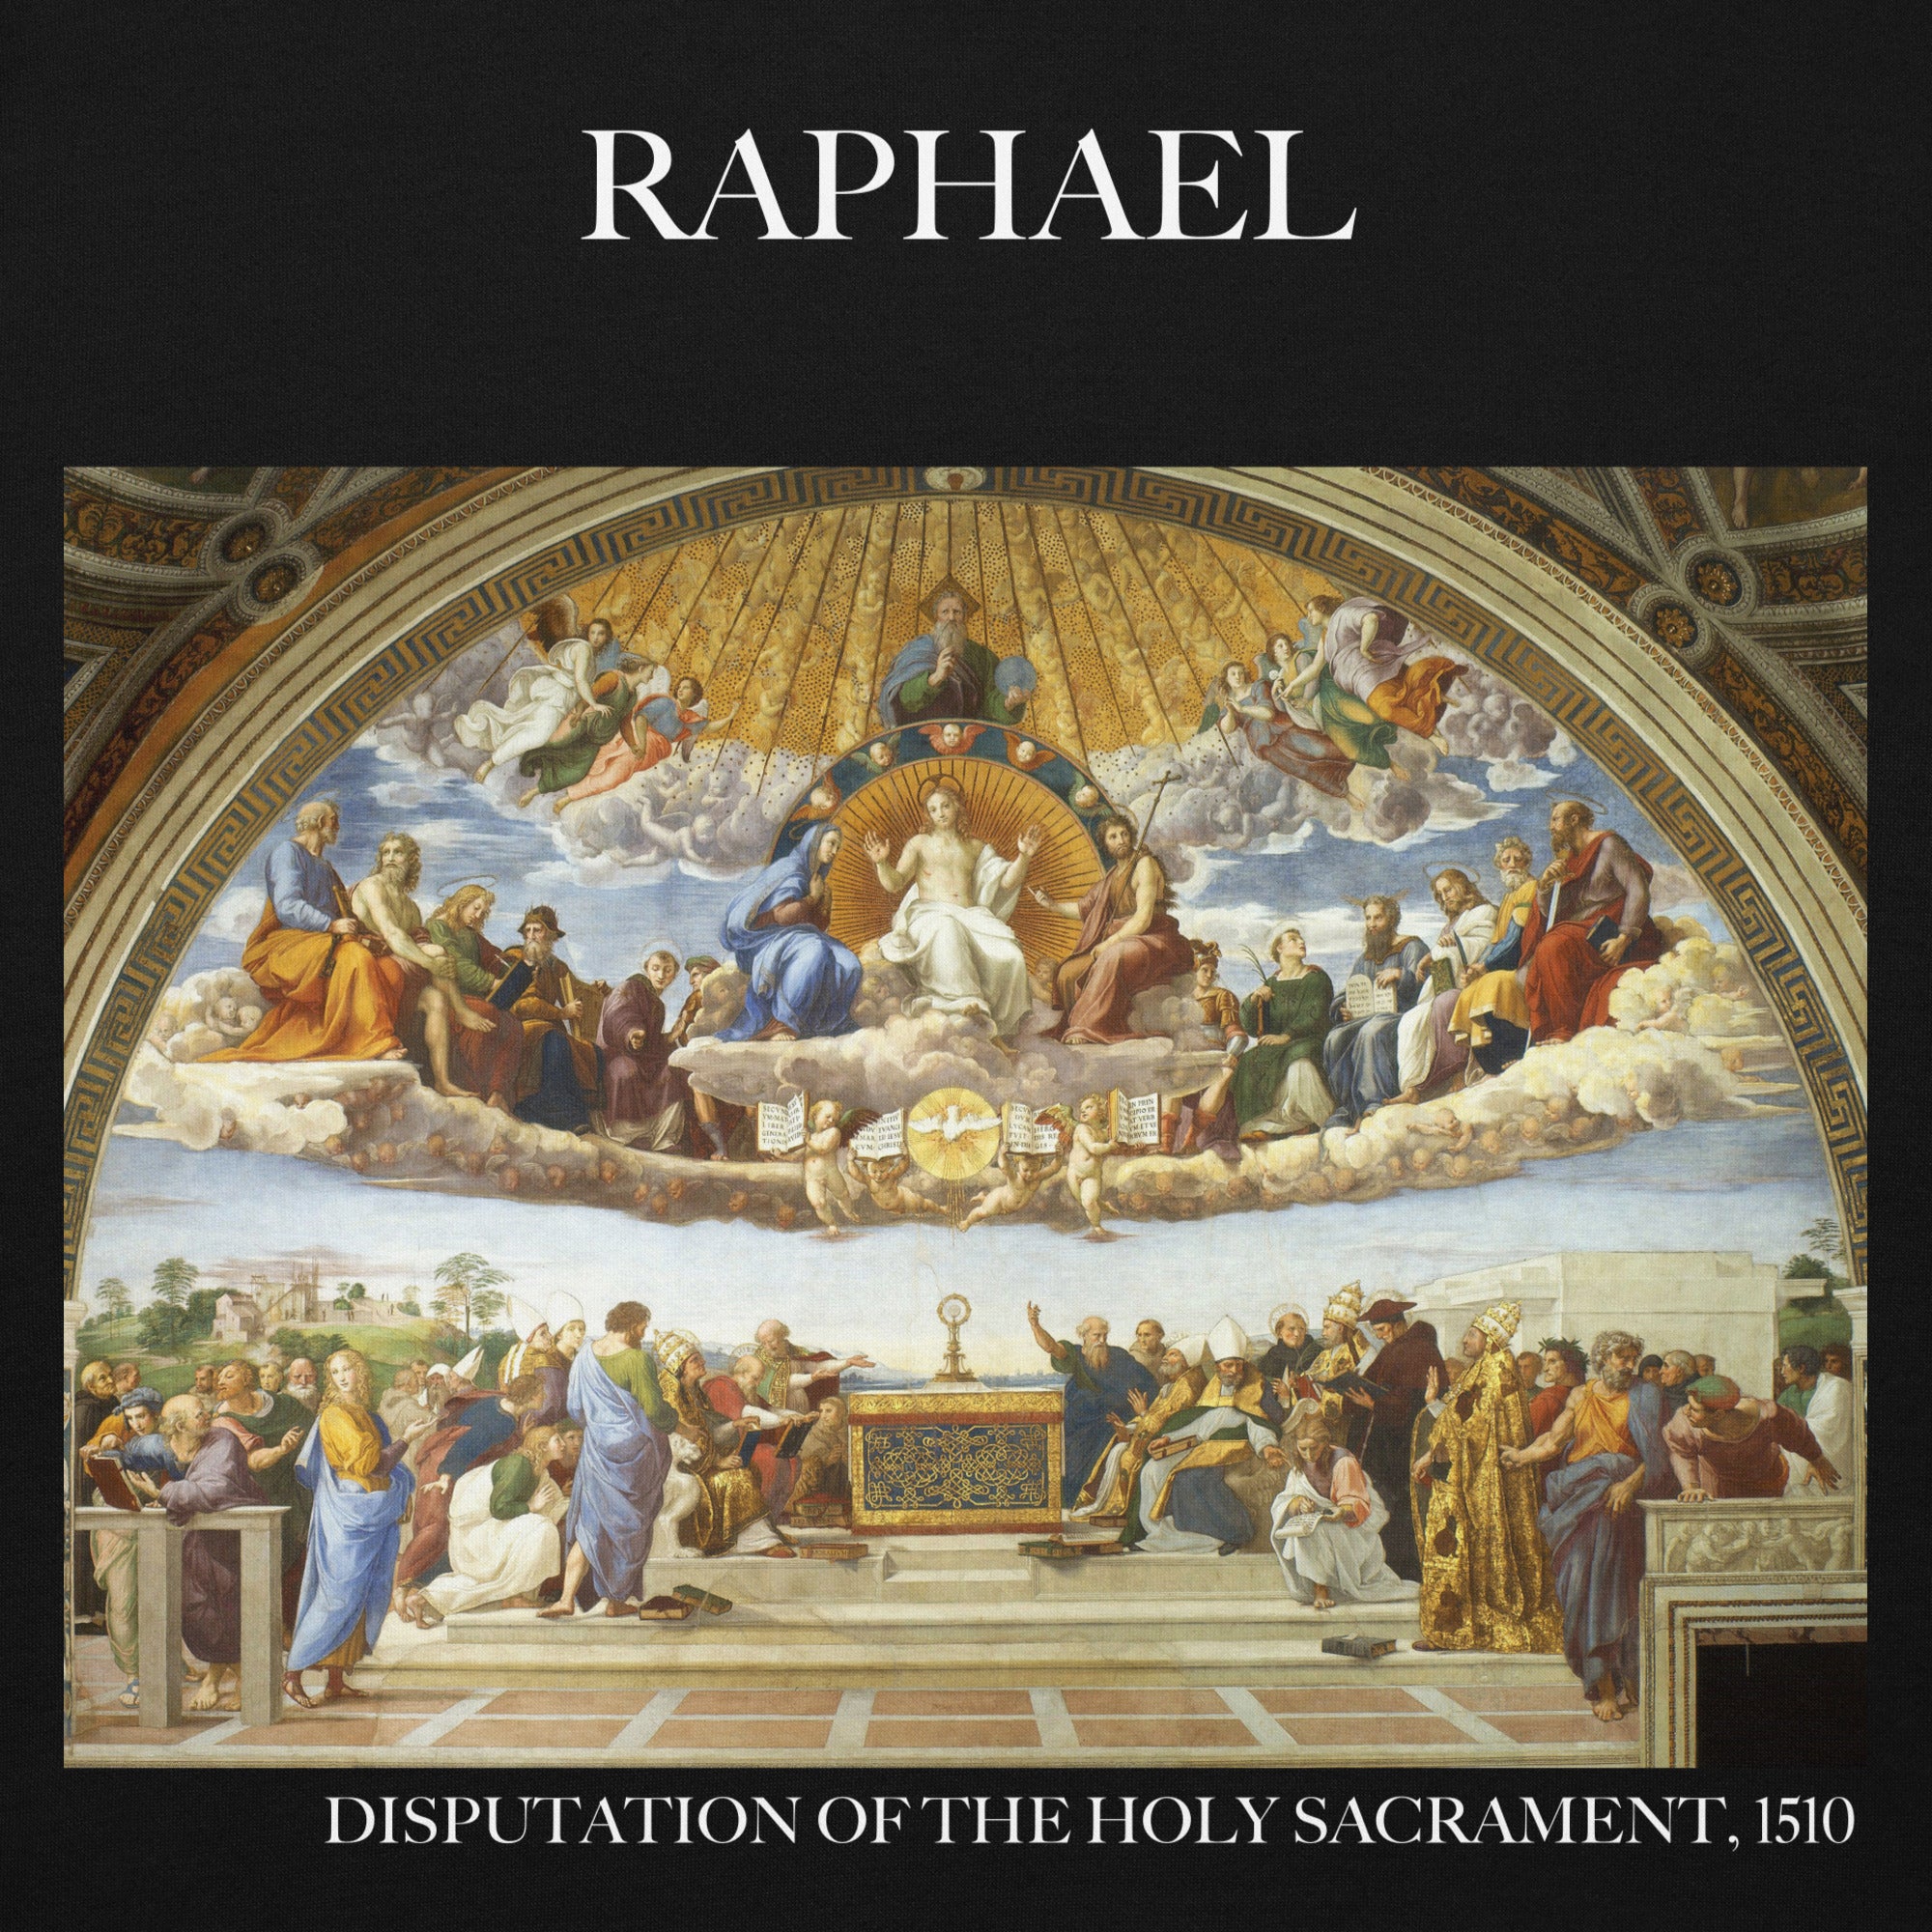 Raphael 'Disputation of the Holy Sacrament' Famous Painting Hoodie | Unisex Premium Art Hoodie